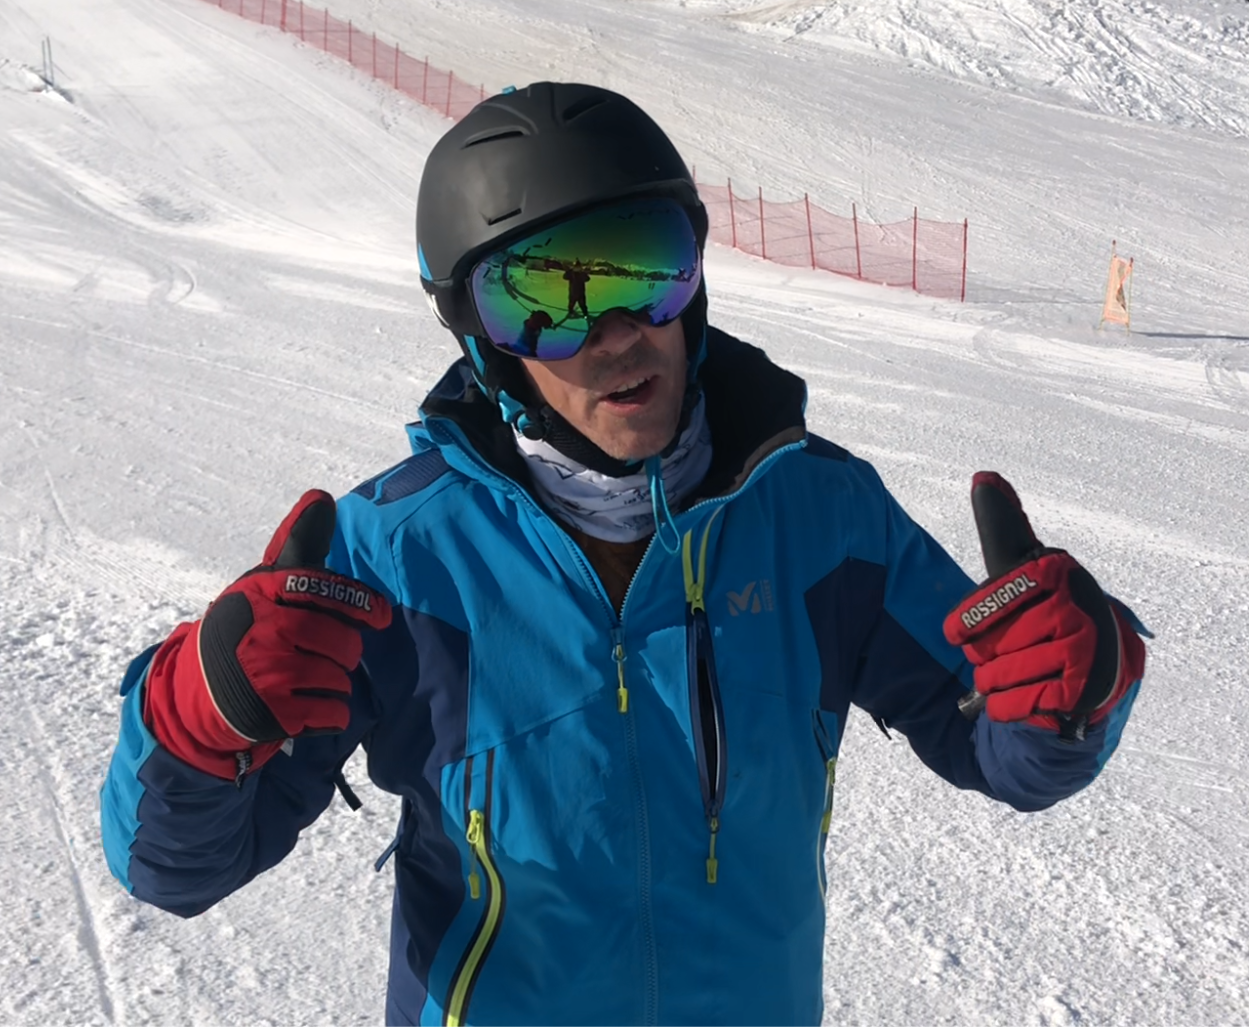 MessyWeekend Ski Goggles Review | The La Tania Ski Blog